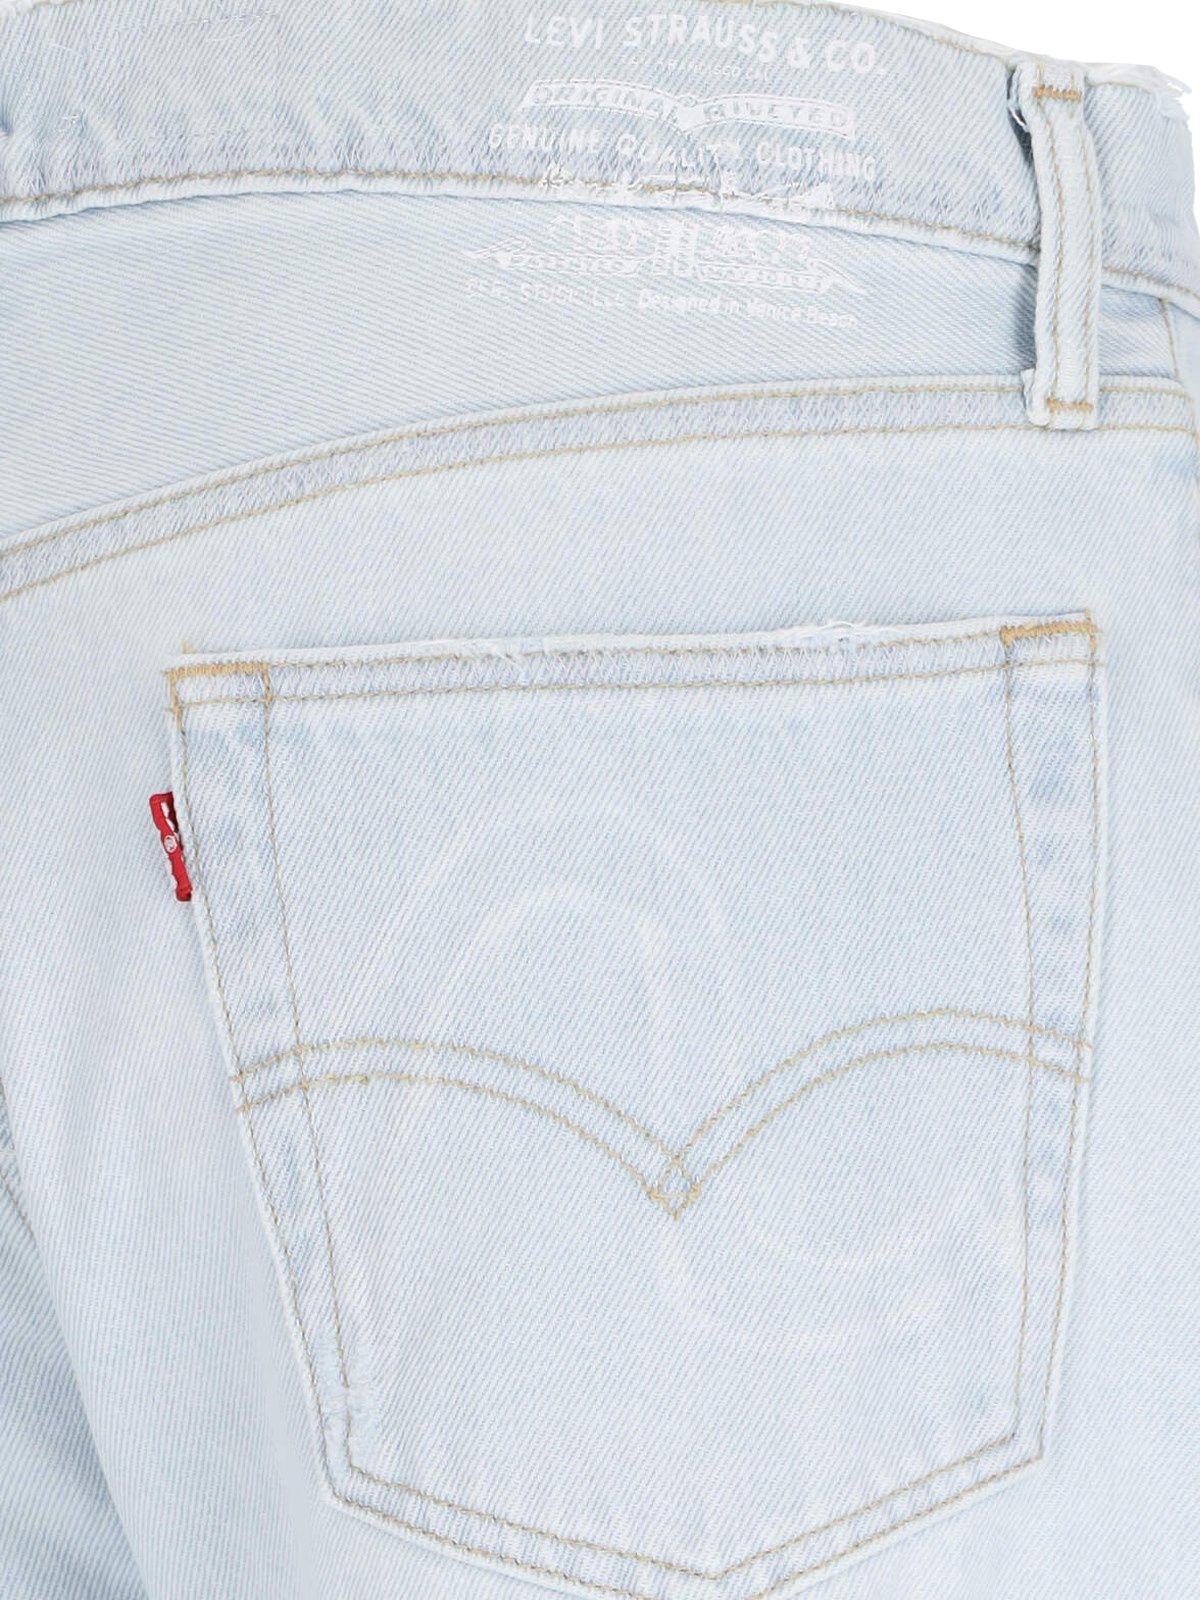 x Levi's Jeans Bootcut